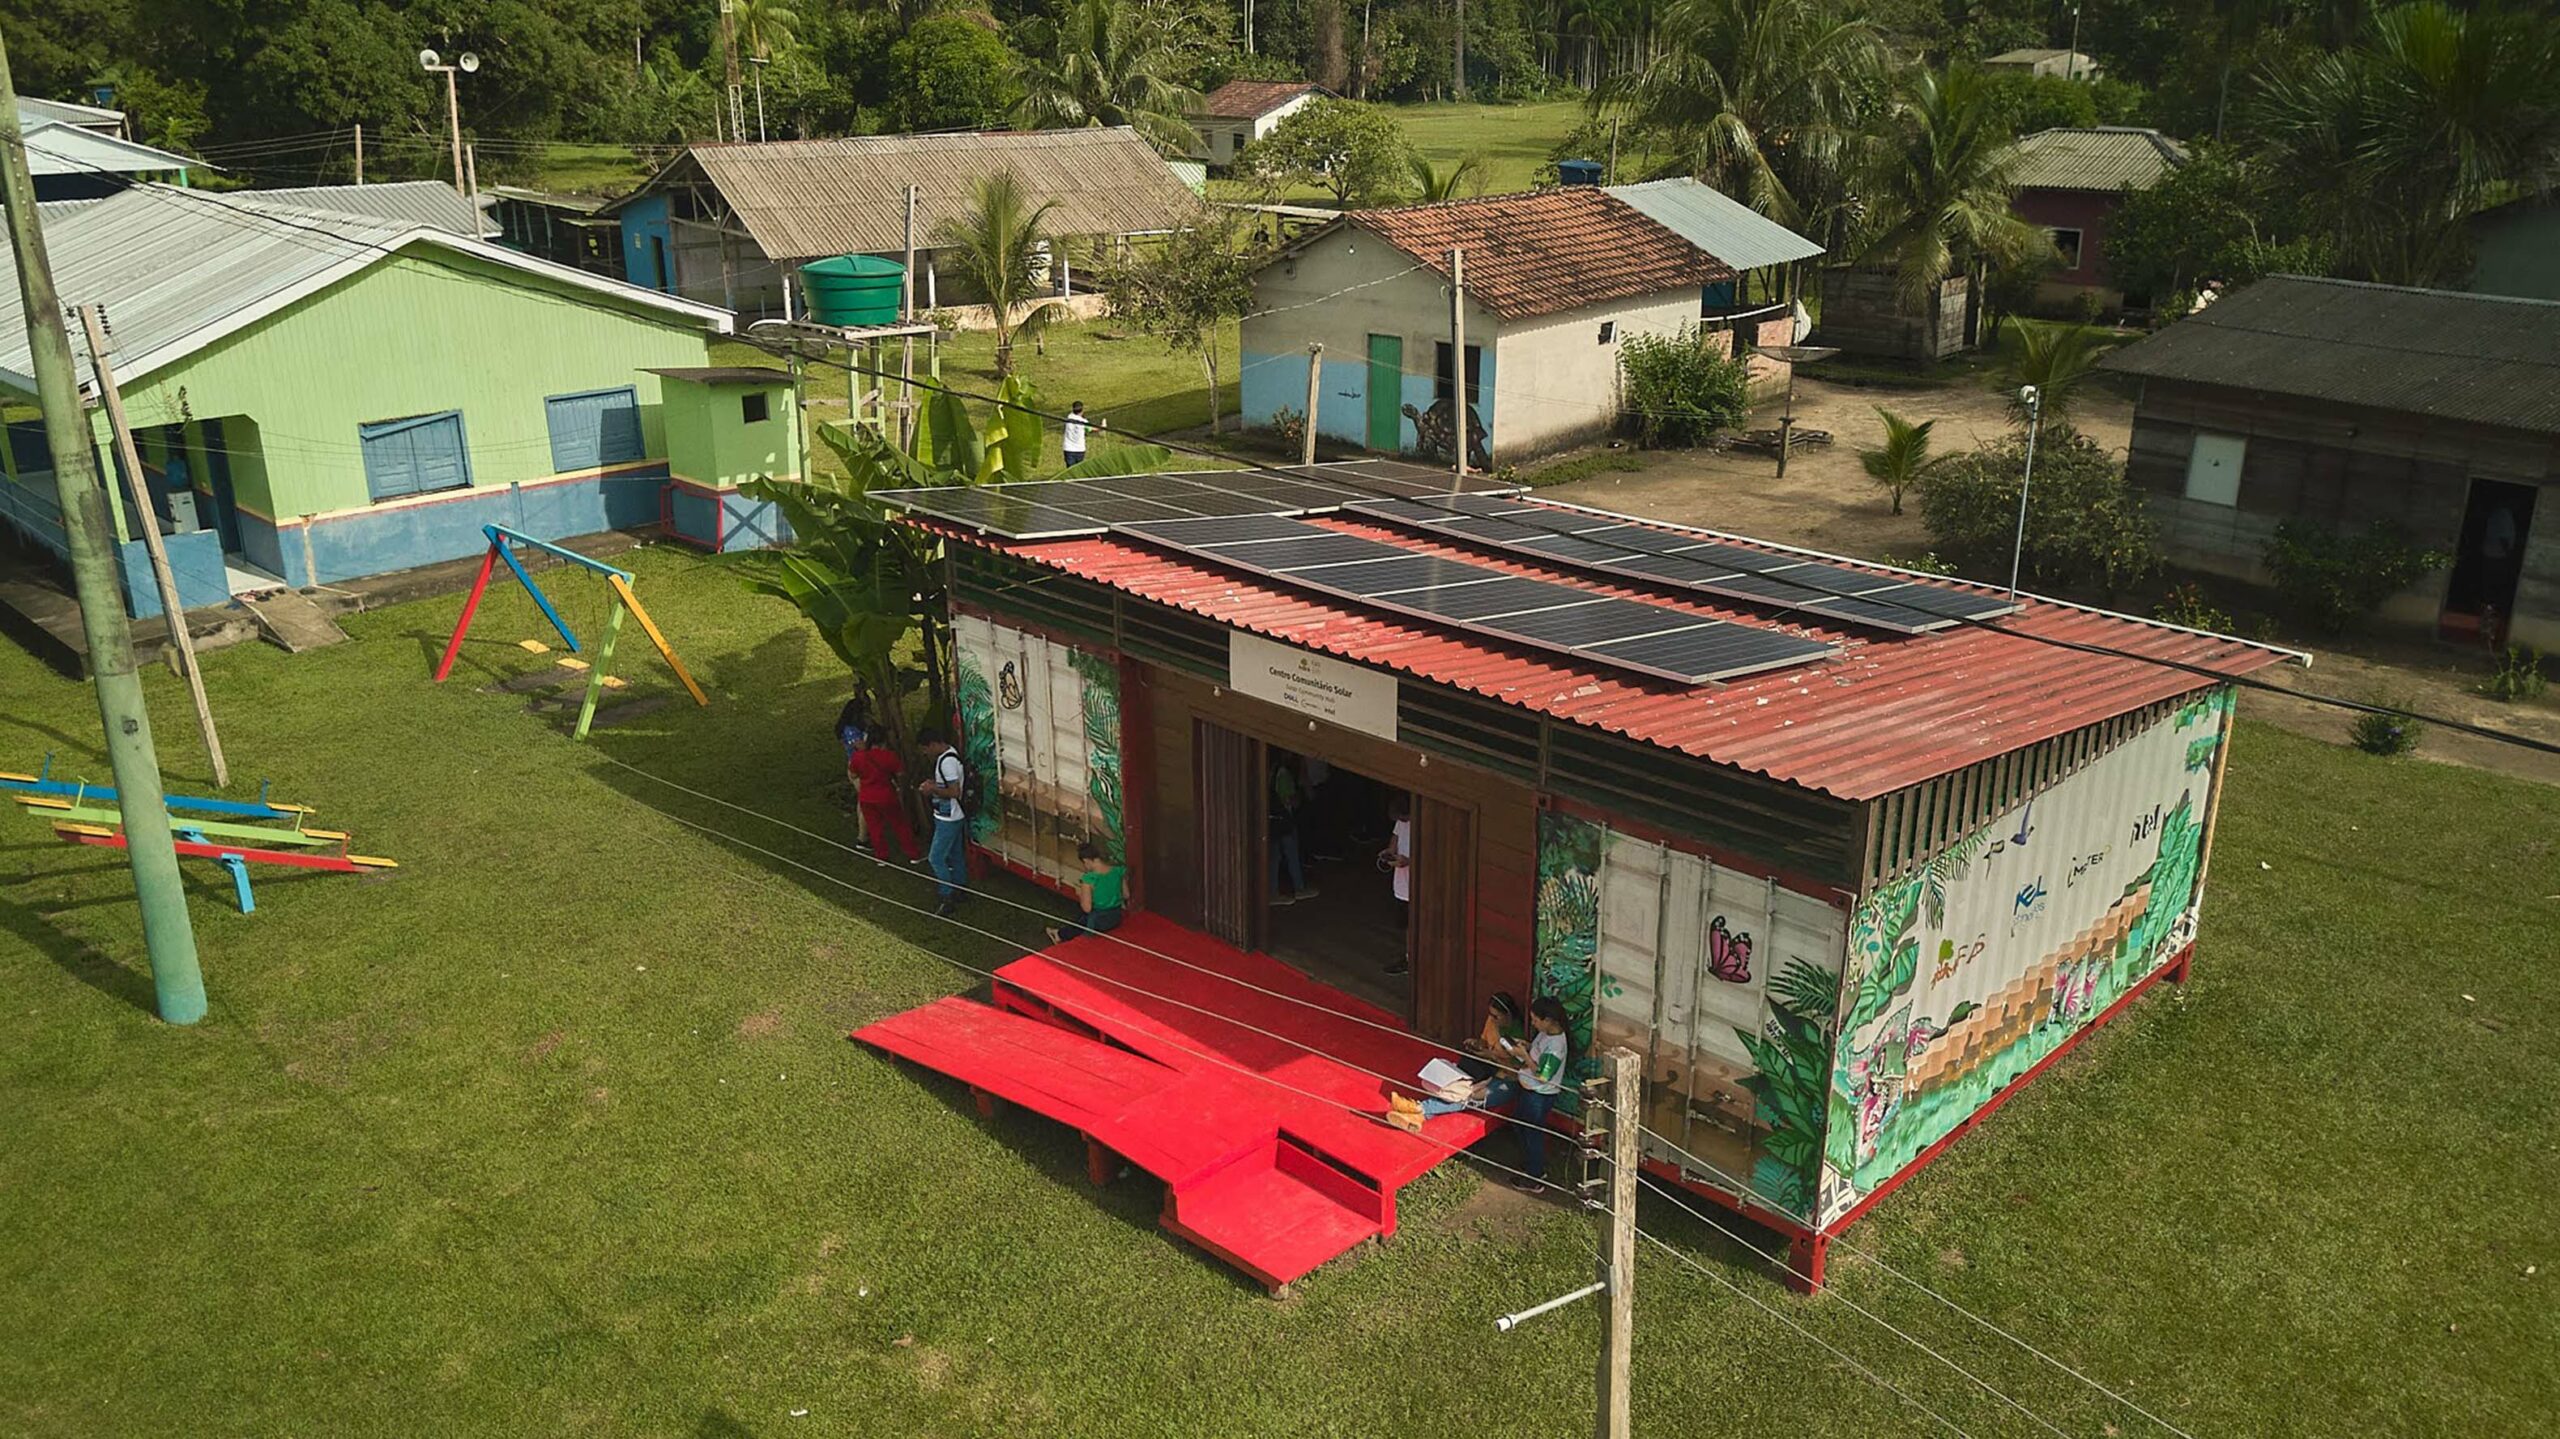 Aerial view of the Solar Community Hub